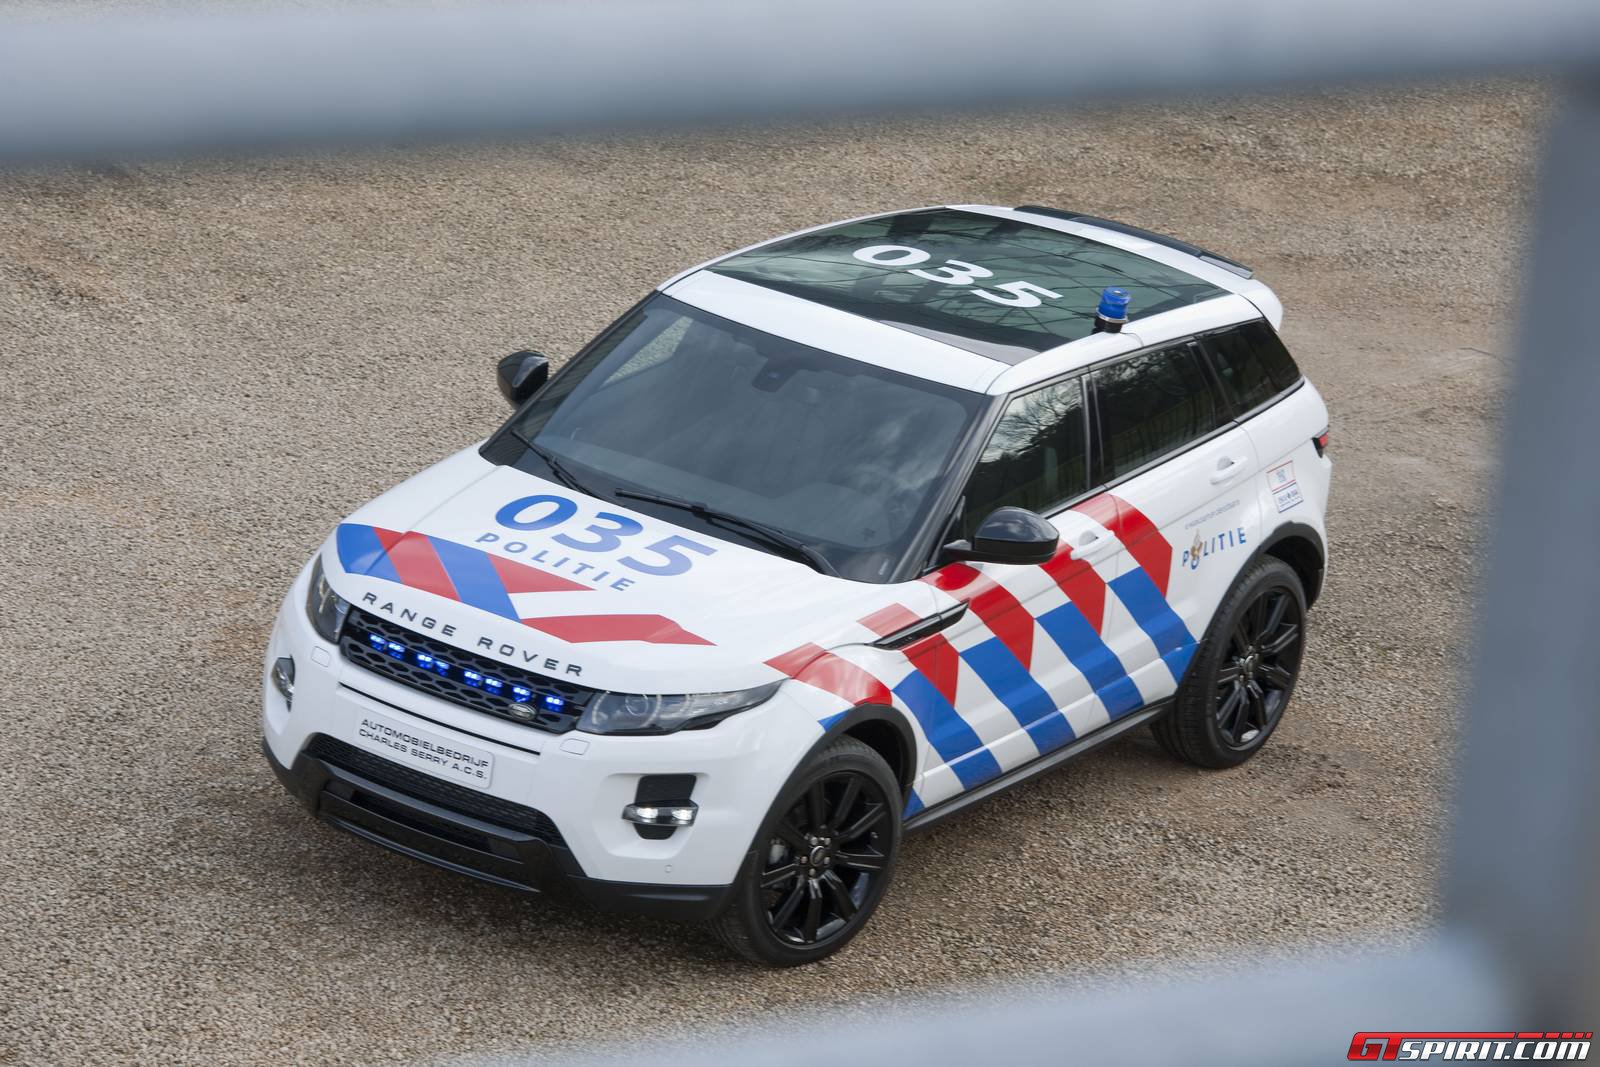 Range Rover Evoque Tampil Gagah Berseragam Polisi Merdekacom